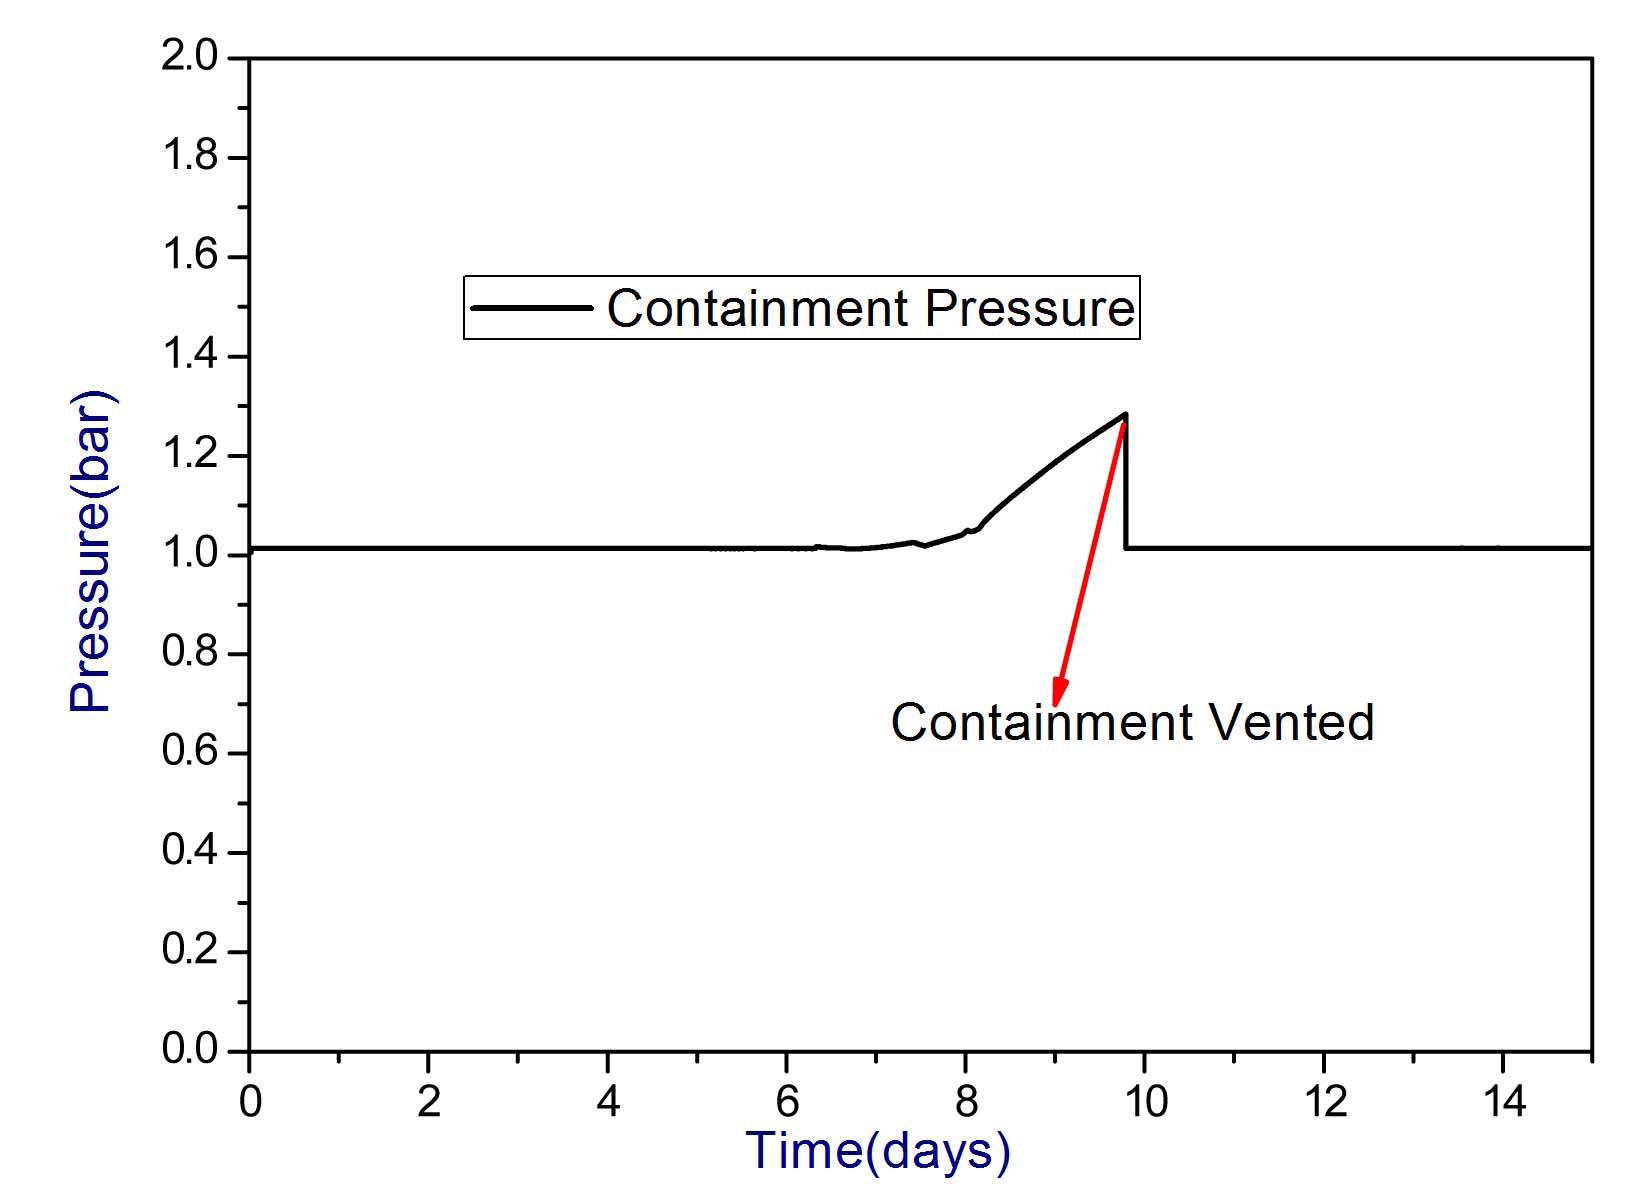 Variation of Containment Pressure